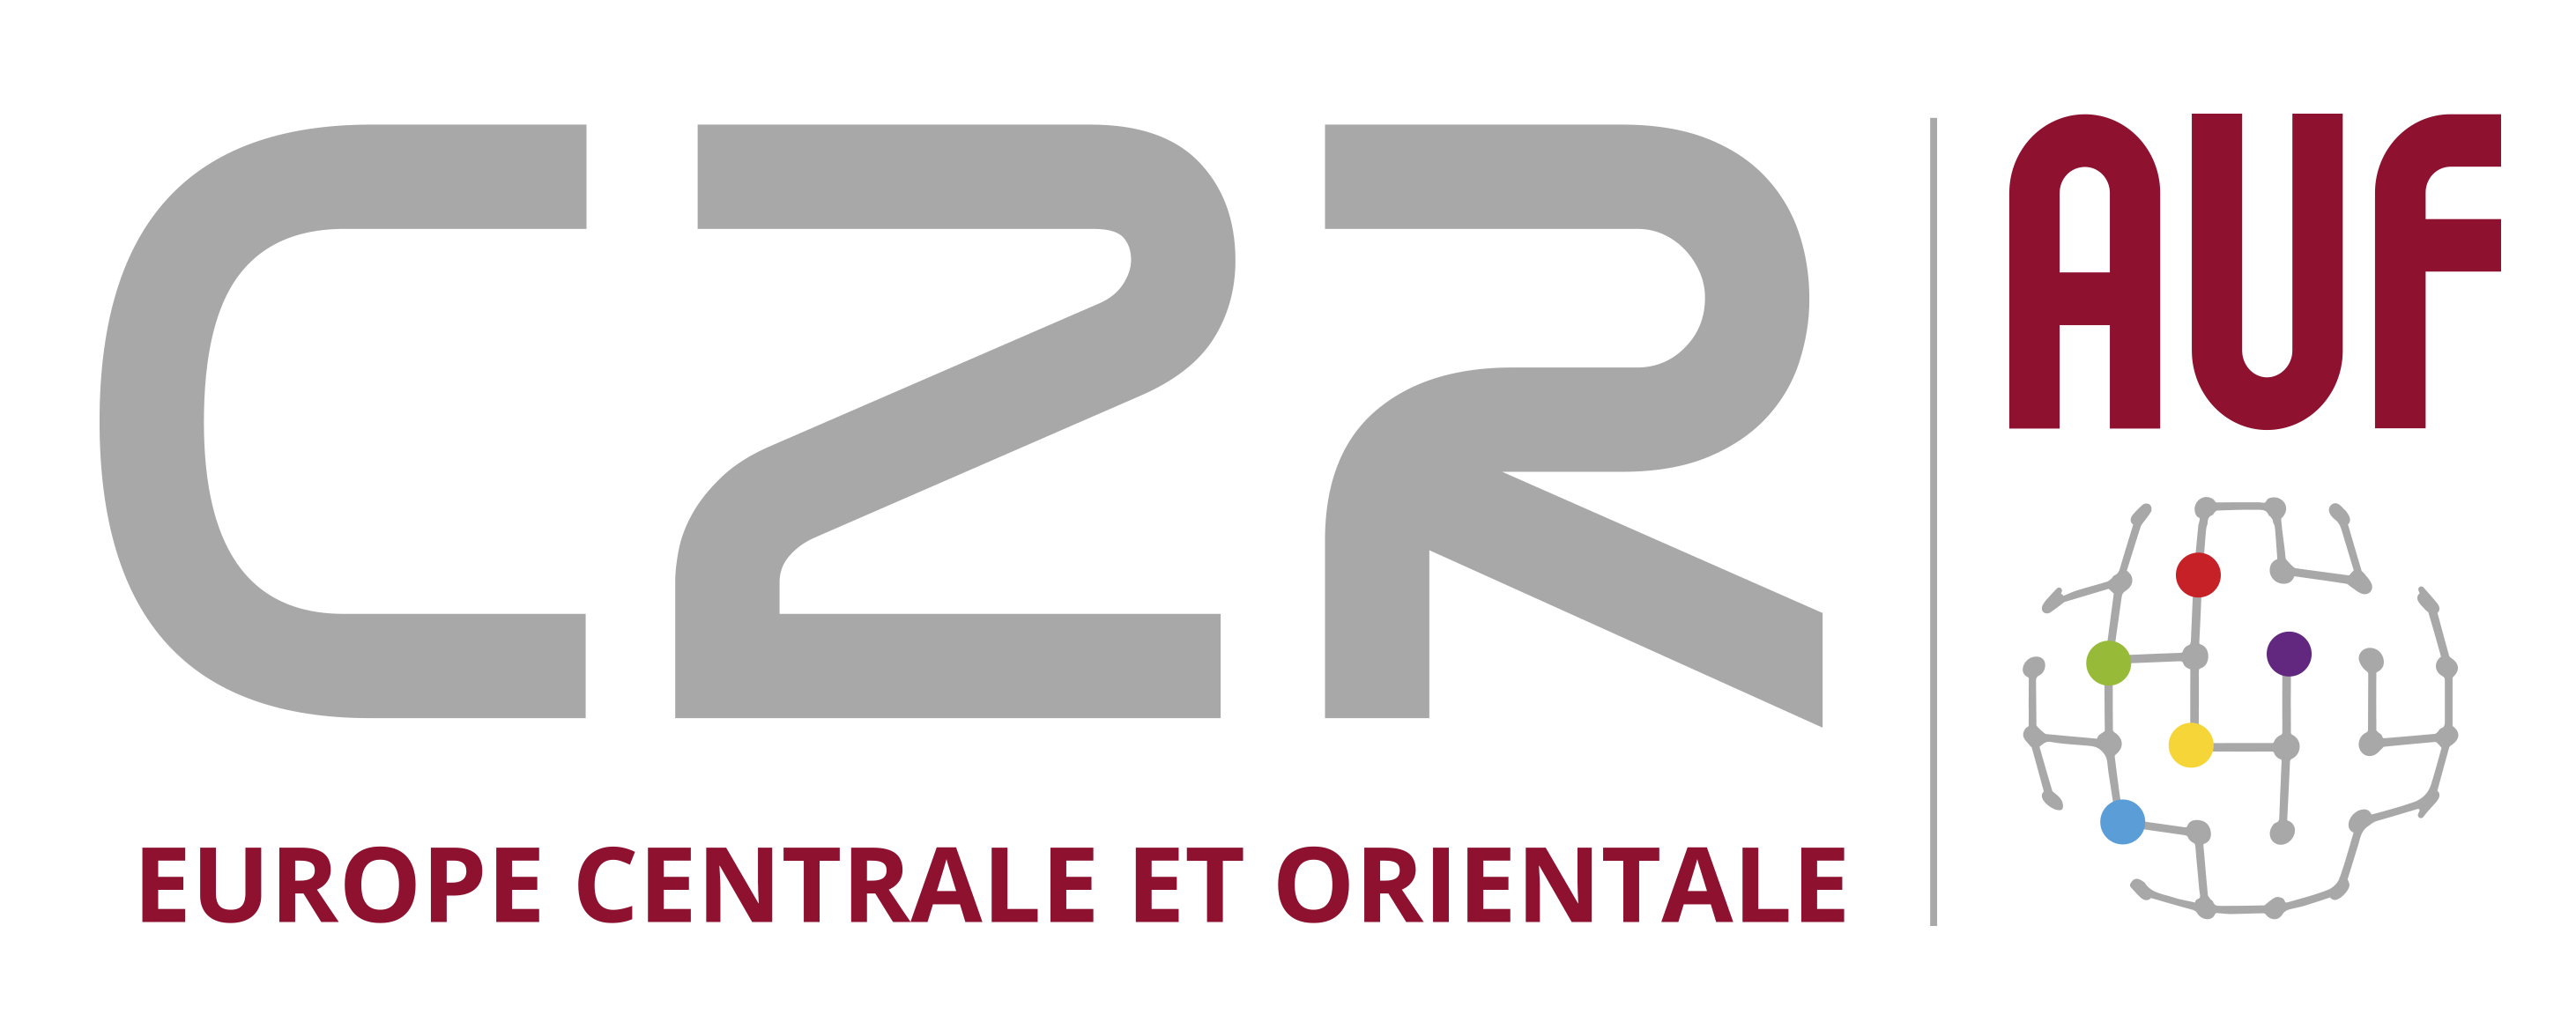 C2R_Logo_Europecentrale&orient